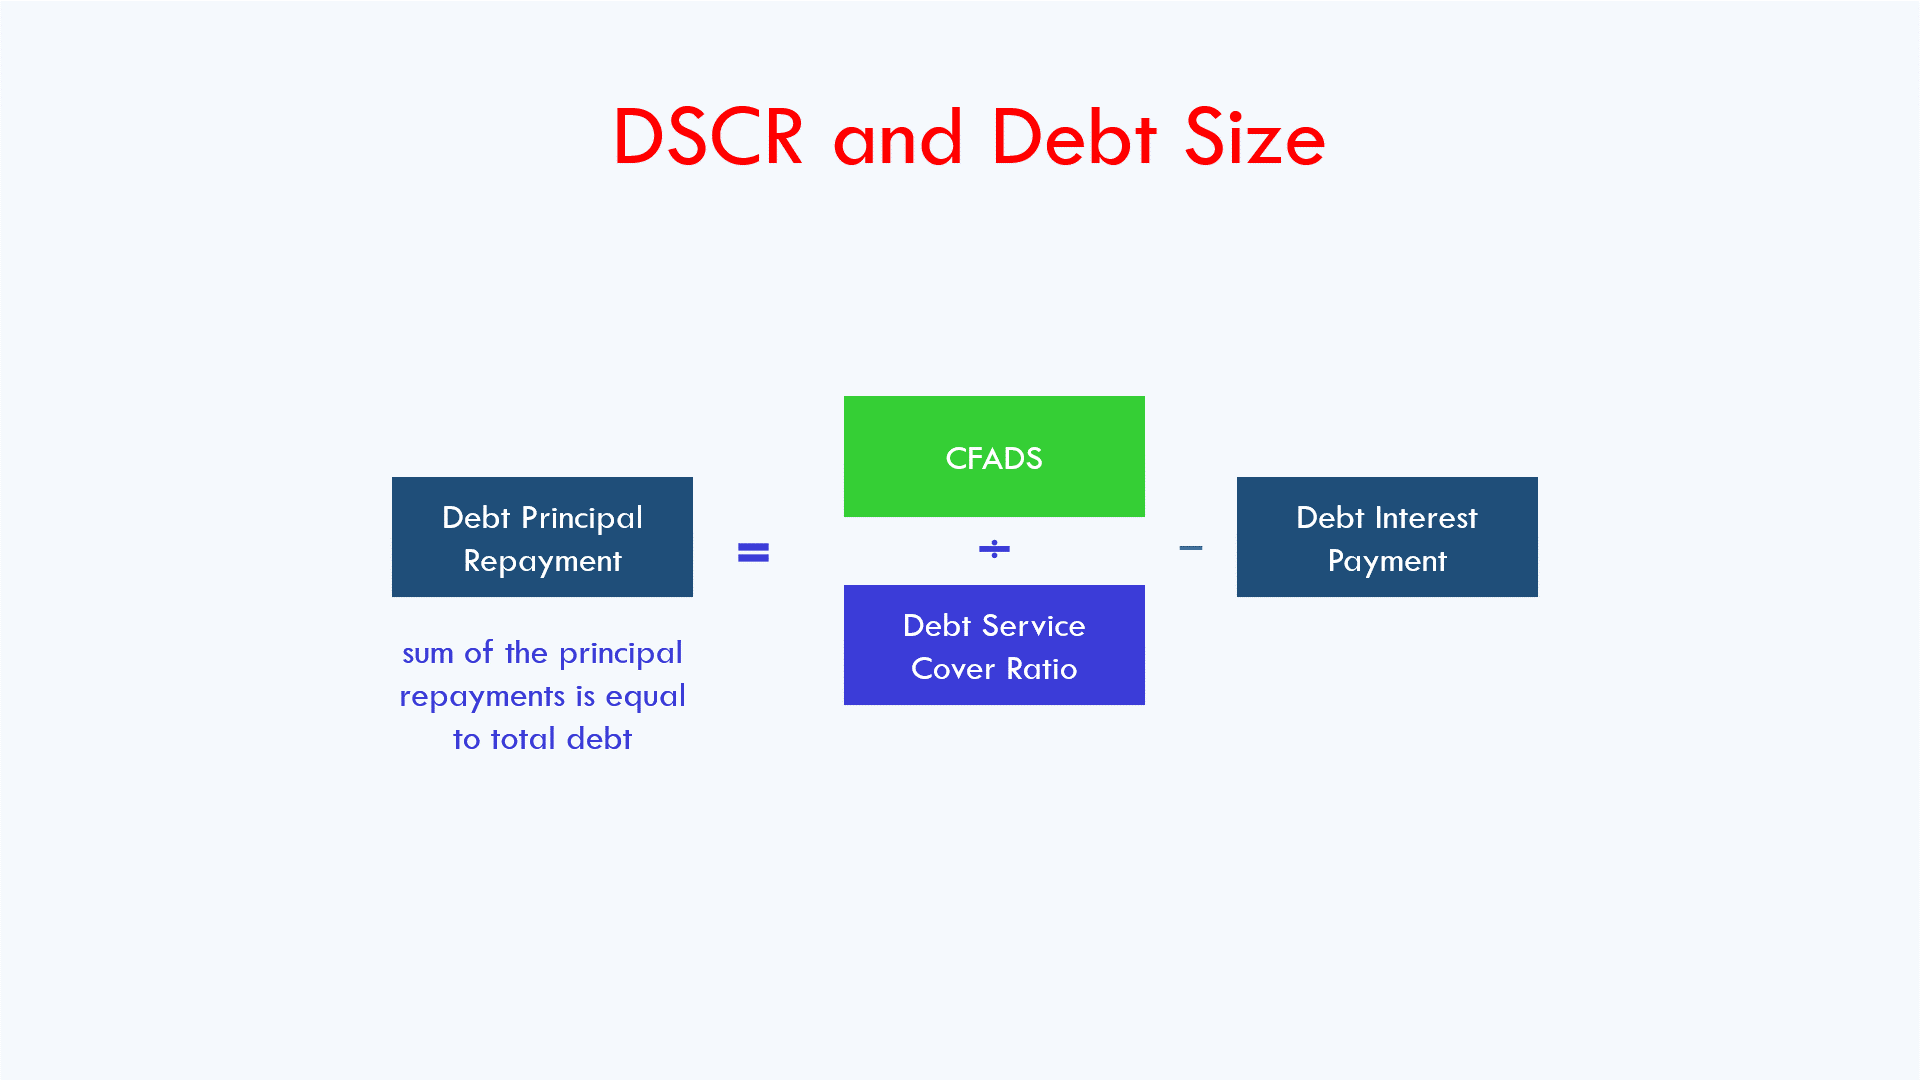 Debt principal repayment